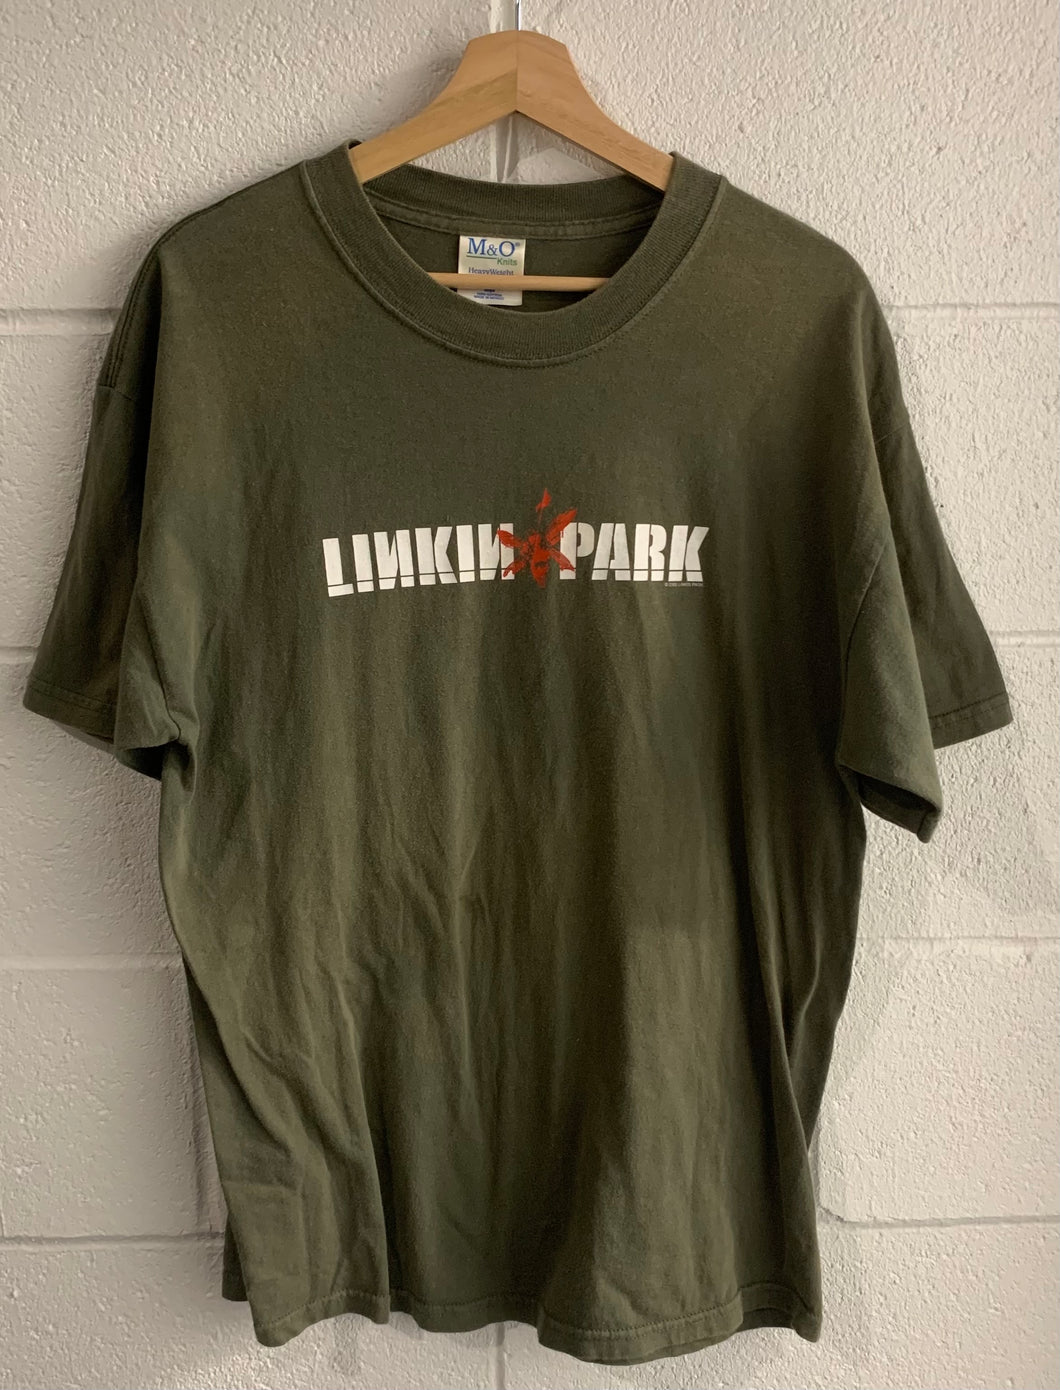 2001 Lincoln Park Band tee Shirt